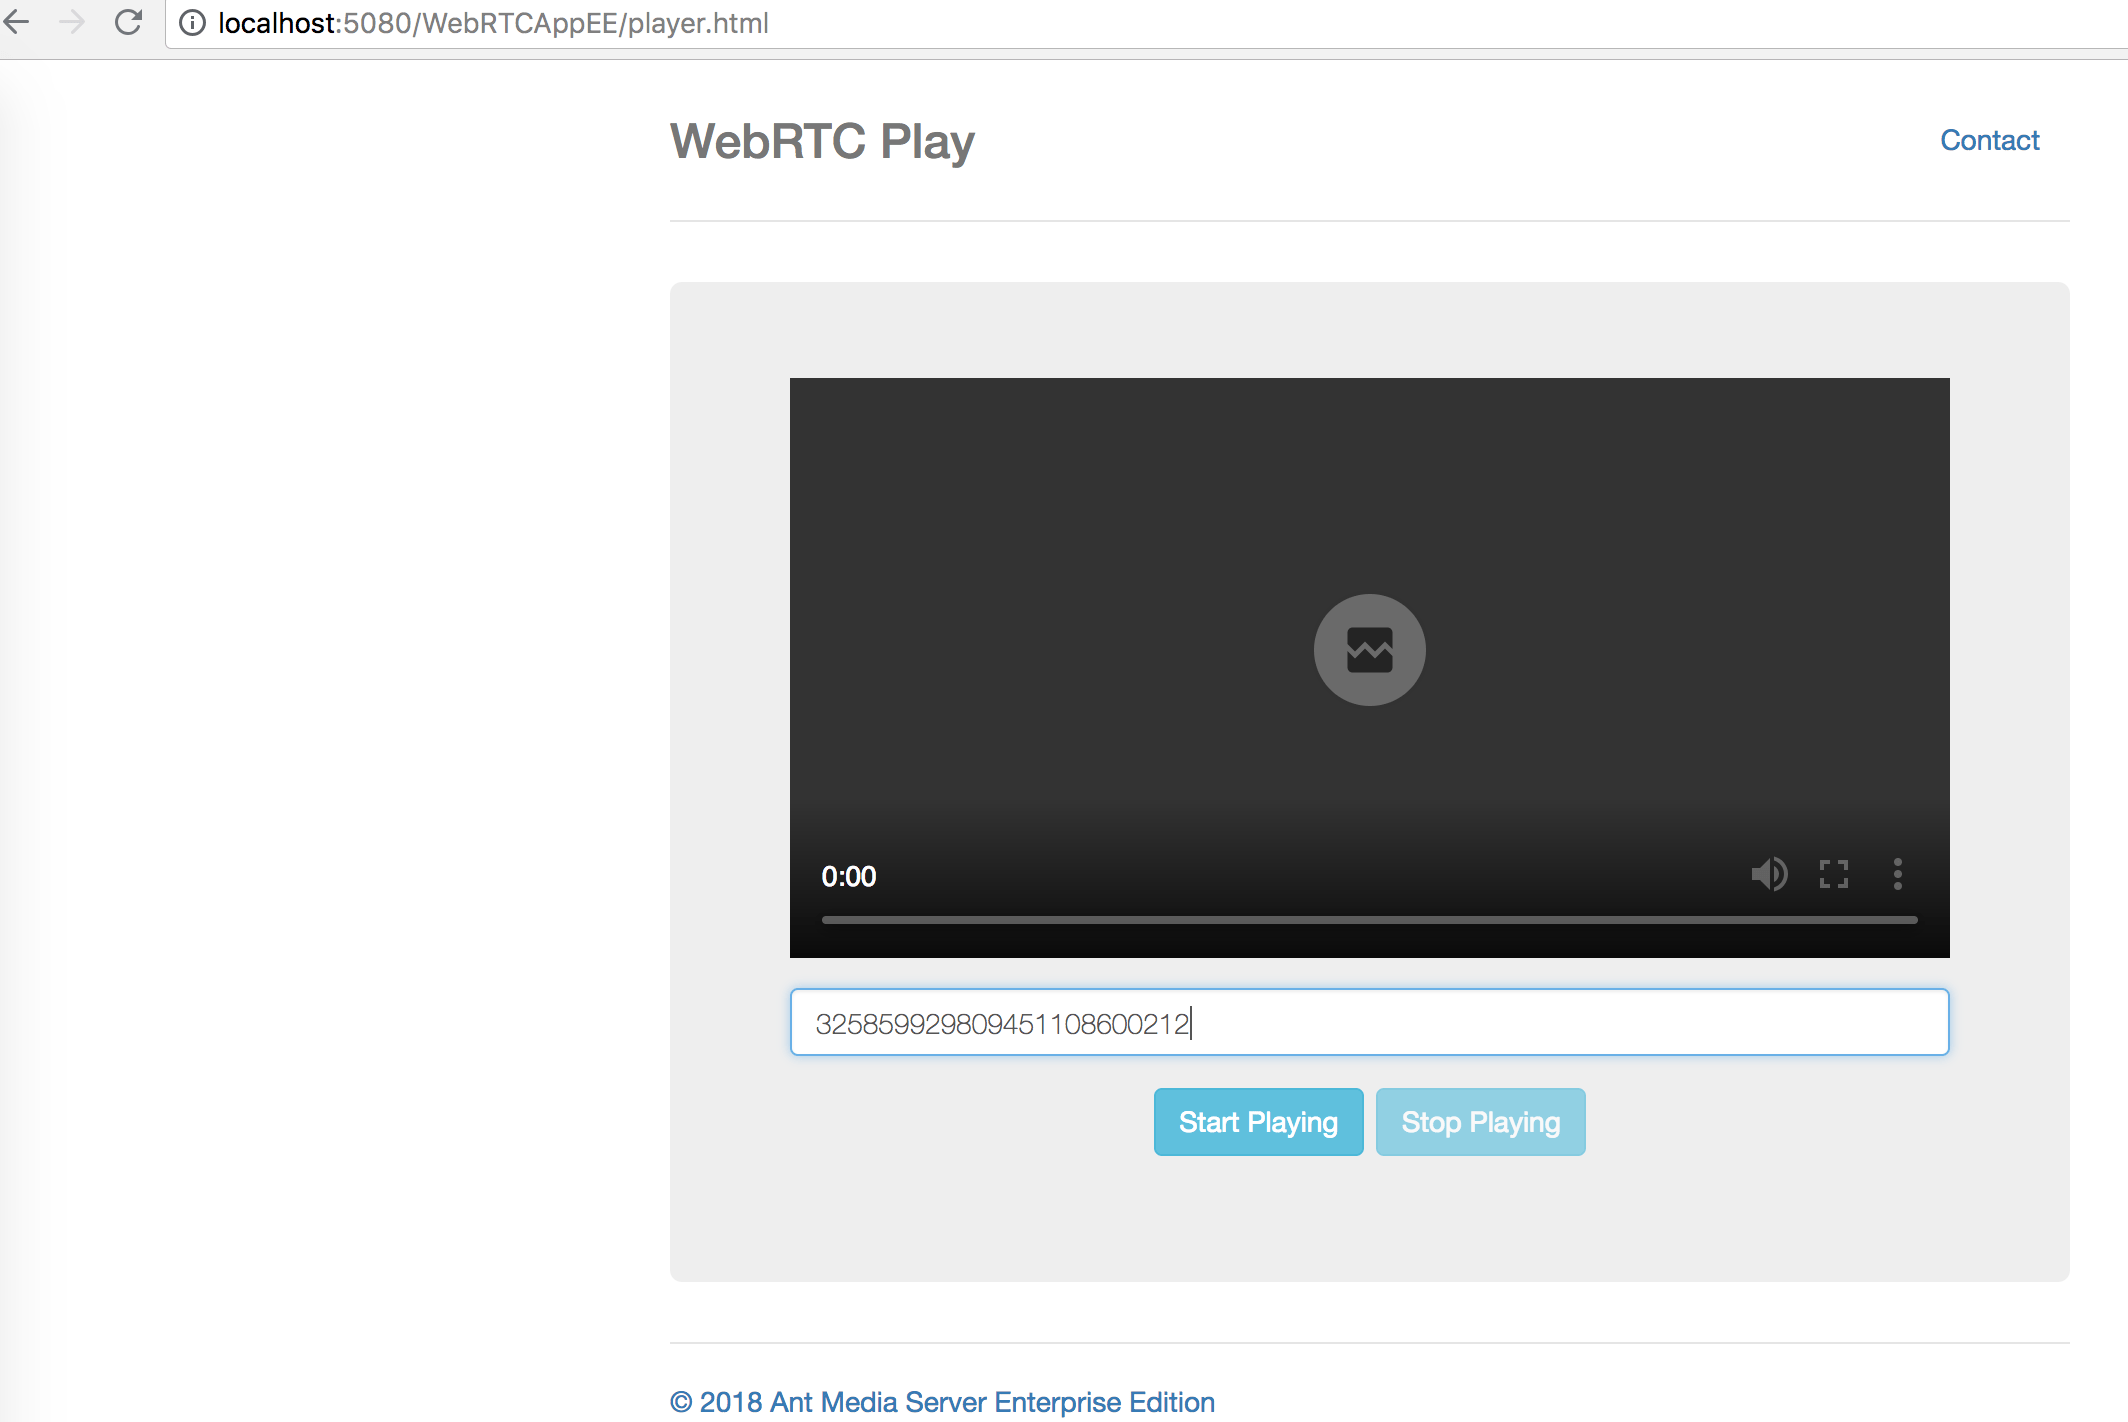 WebRTC Play - Ant Media Server